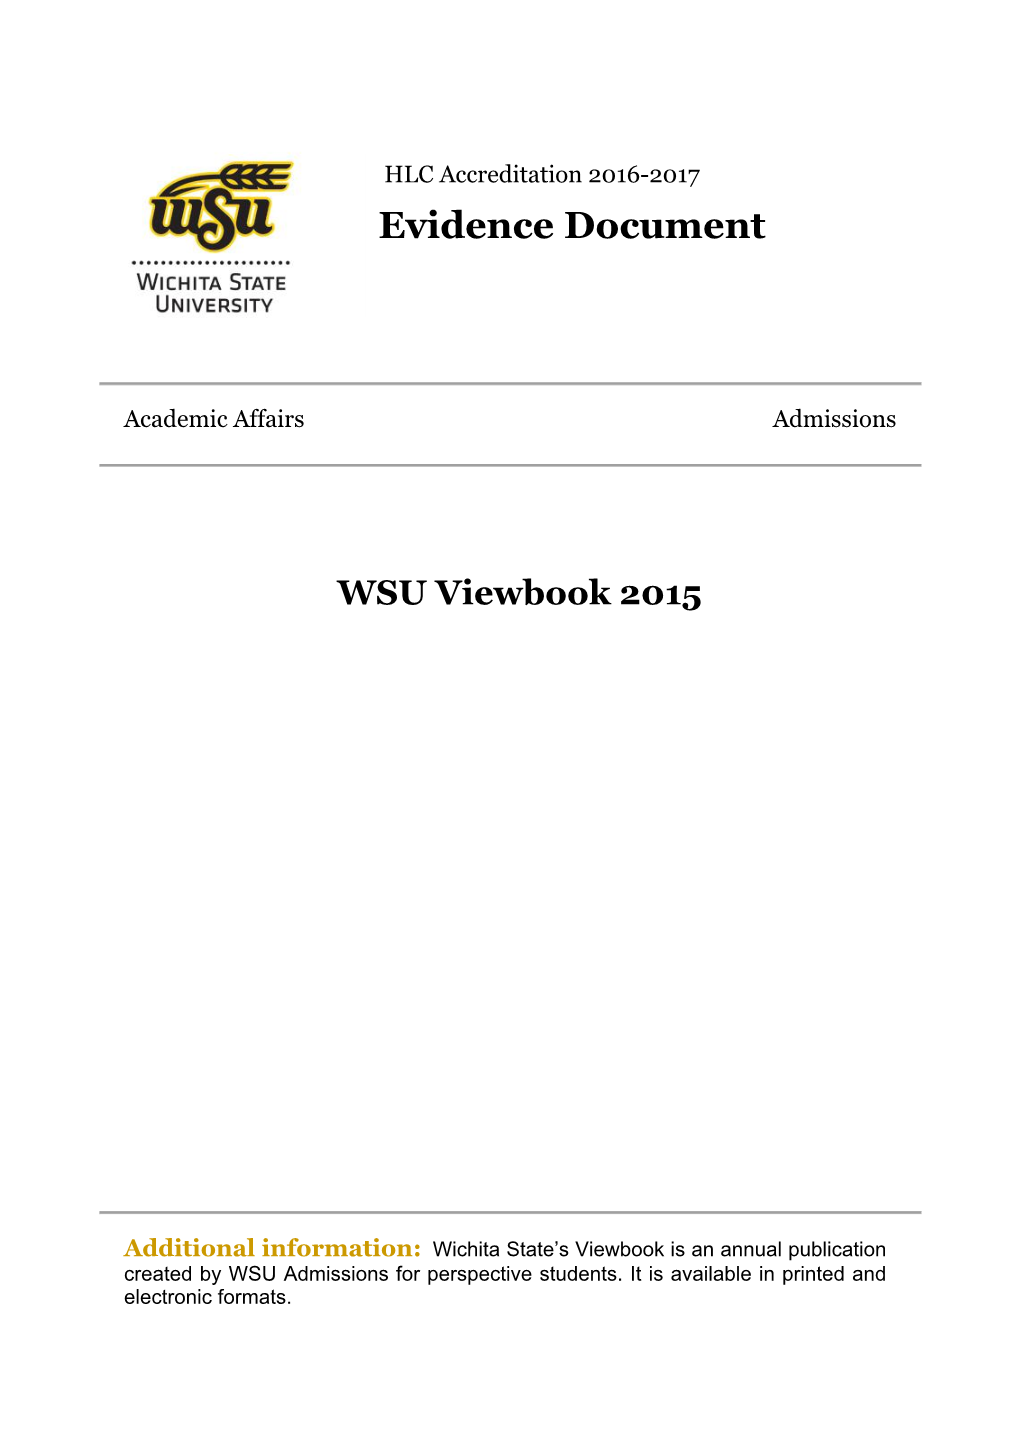 Evidence Document